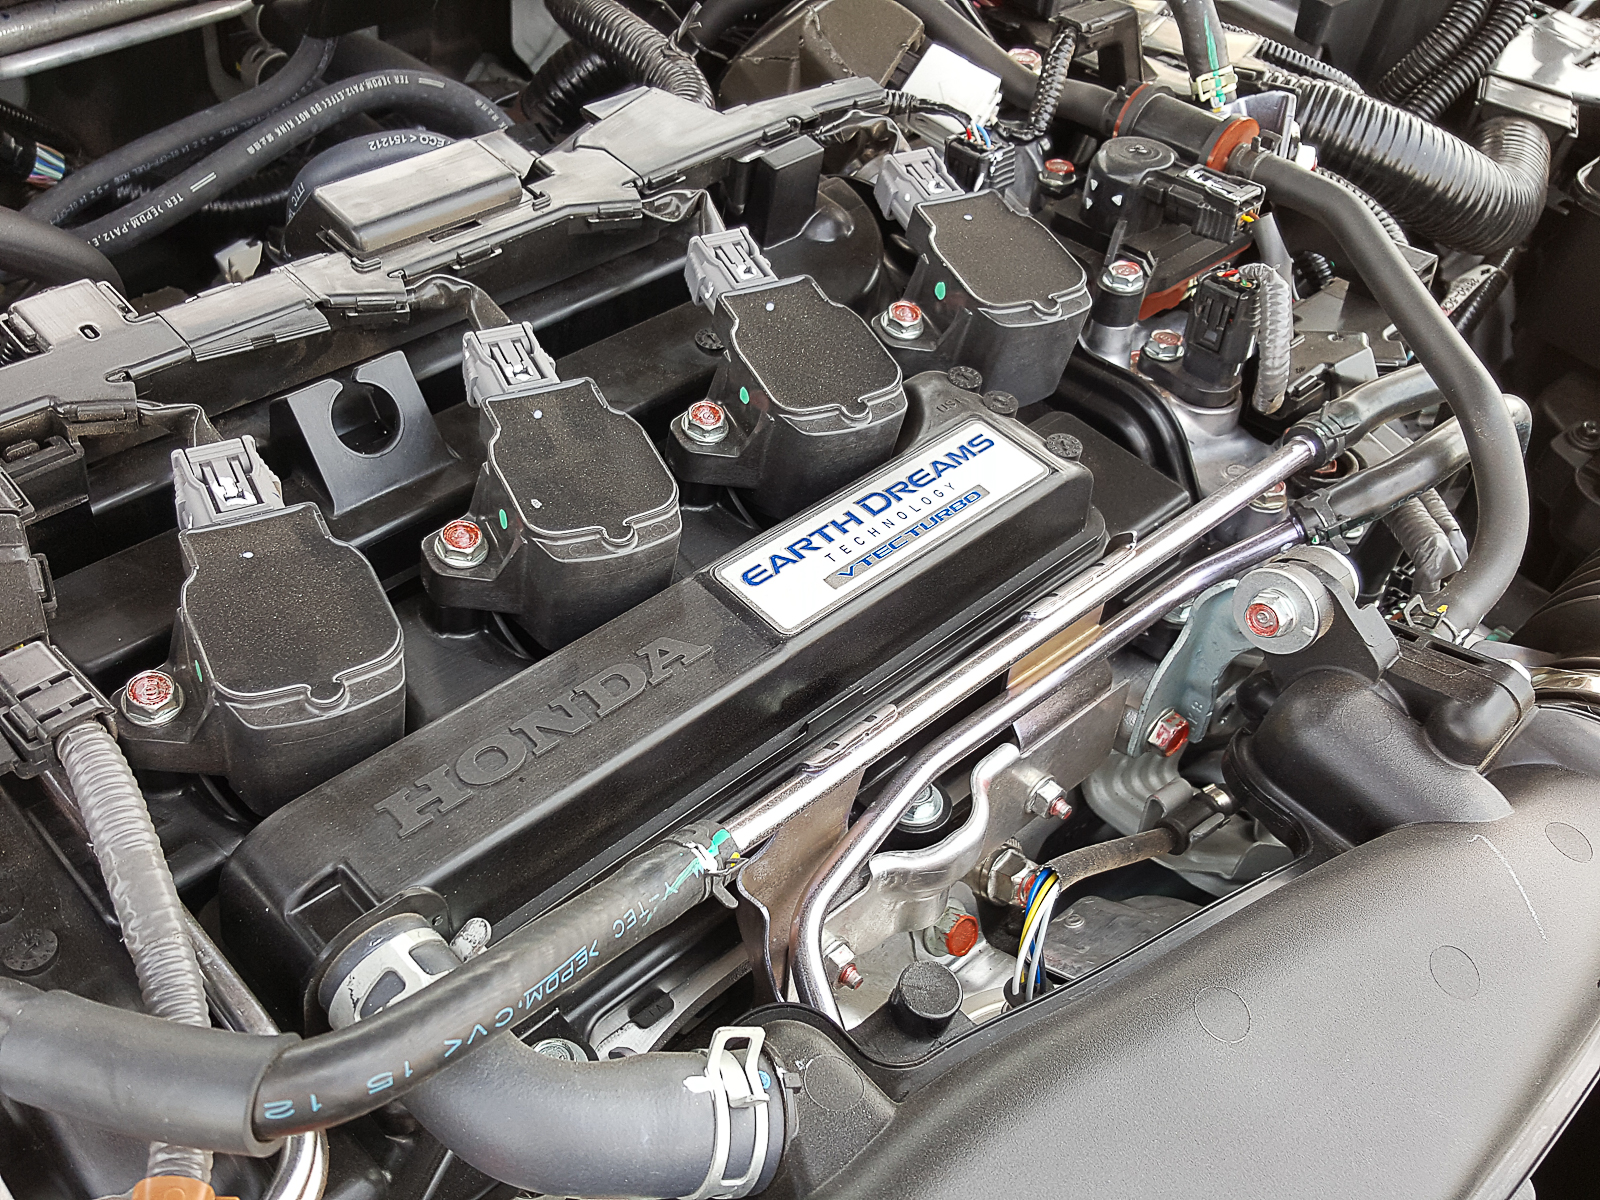 Honda Civic Turbo 1.5 RS Review By Bonn